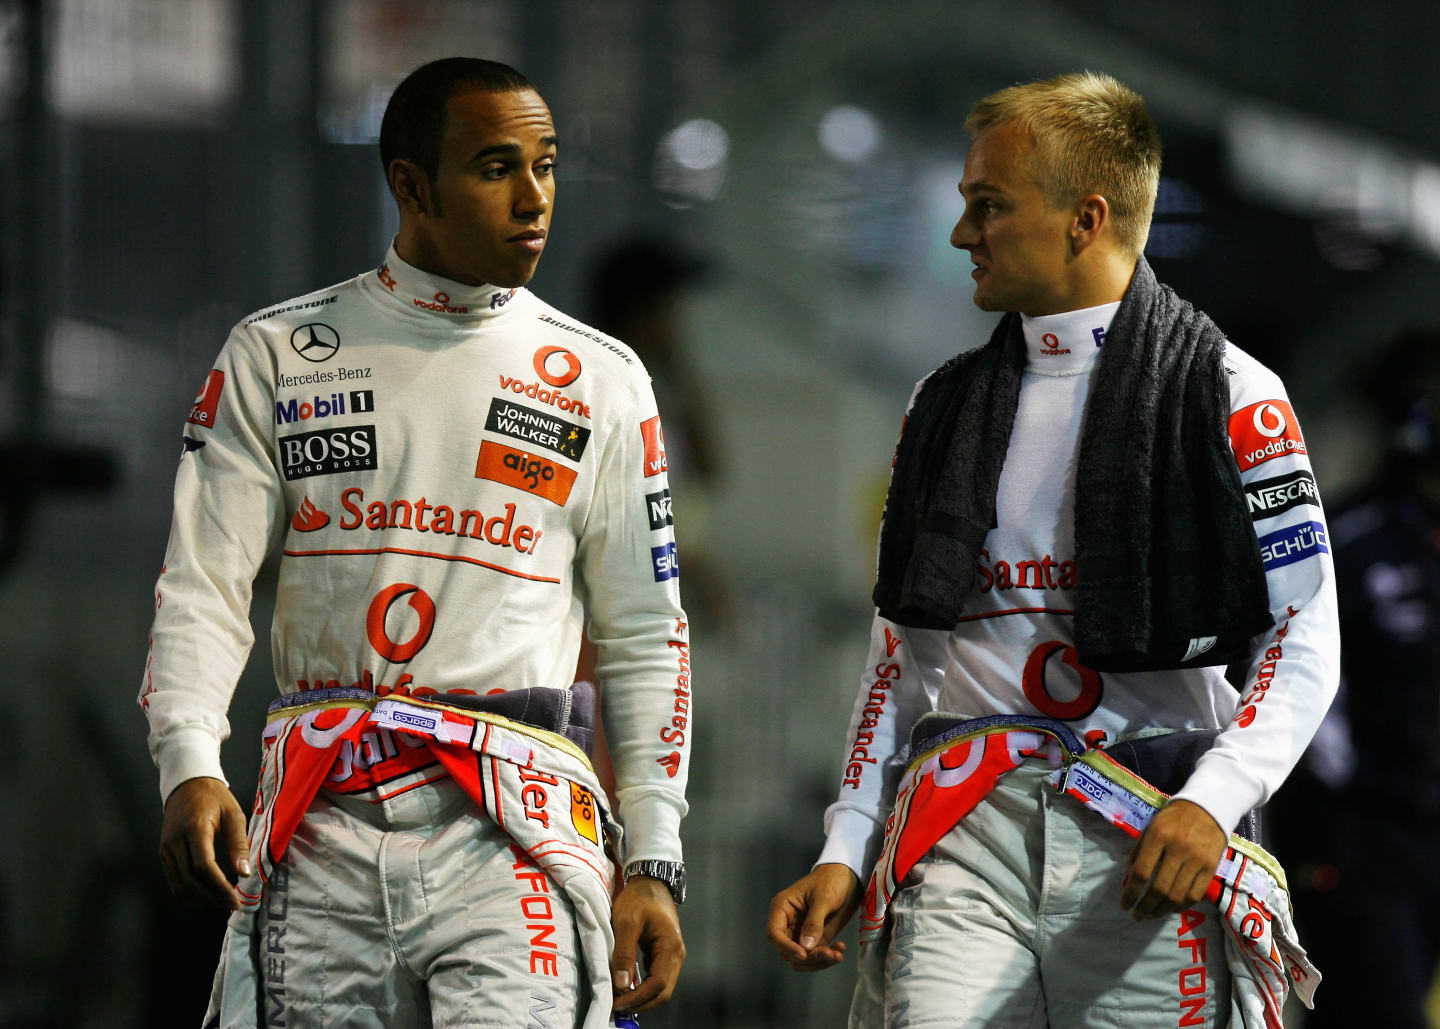 SINGAPORE - SEPTEMBER 27:  (L-R) Lewis Hamilton of Great Britain and McLaren Mercedes and Heikki